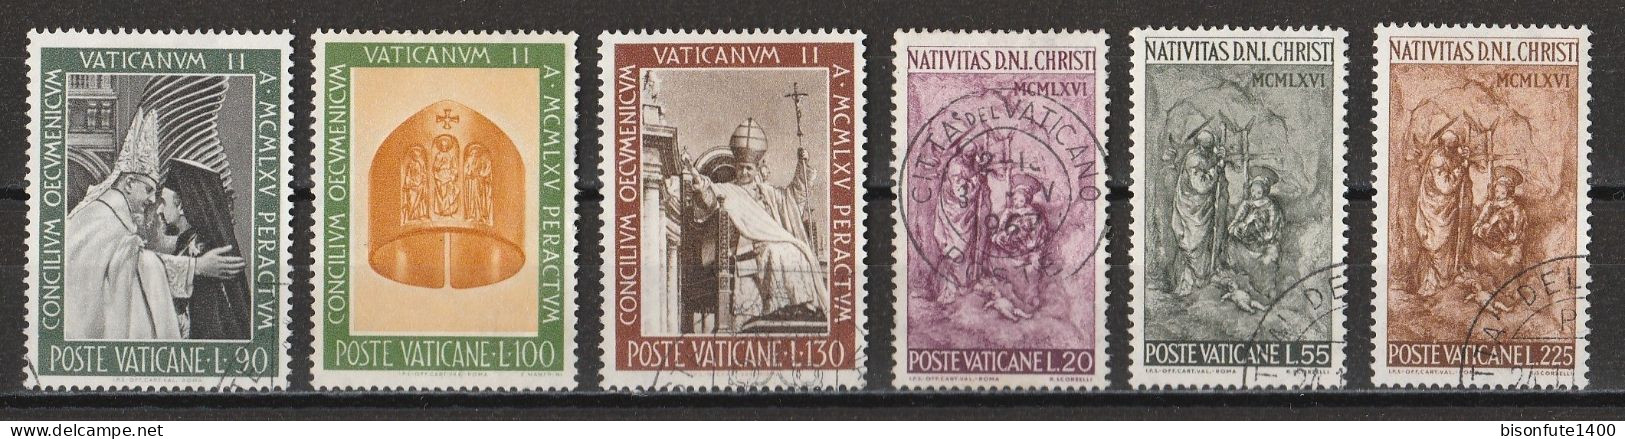 Vatican 1966 : Timbres Yvert & Tellier N° 451 - 452 - 453 - 454 - 455 - 456 - 457 - 458 - 459 - 460 - 461 - 462 -....... - Gebruikt